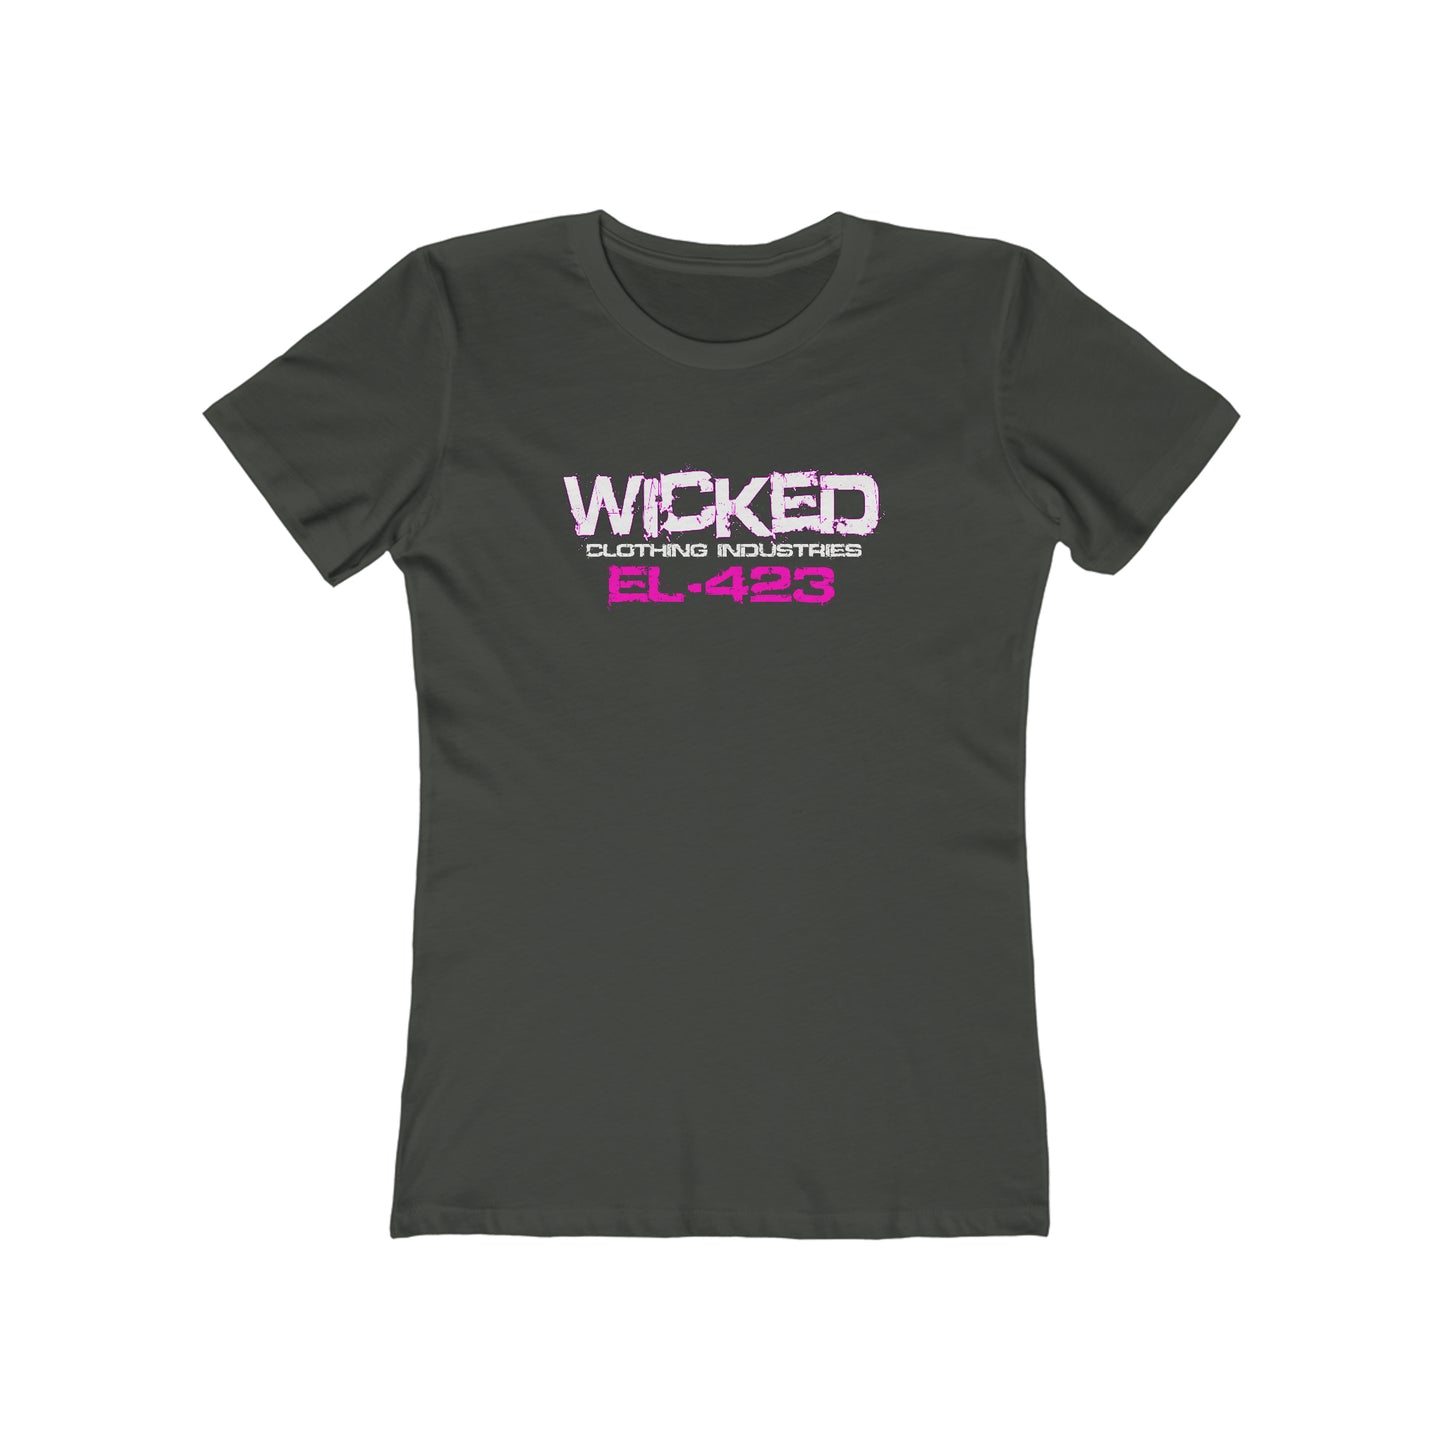 Wicked EL 423 Electric Pink /WCI